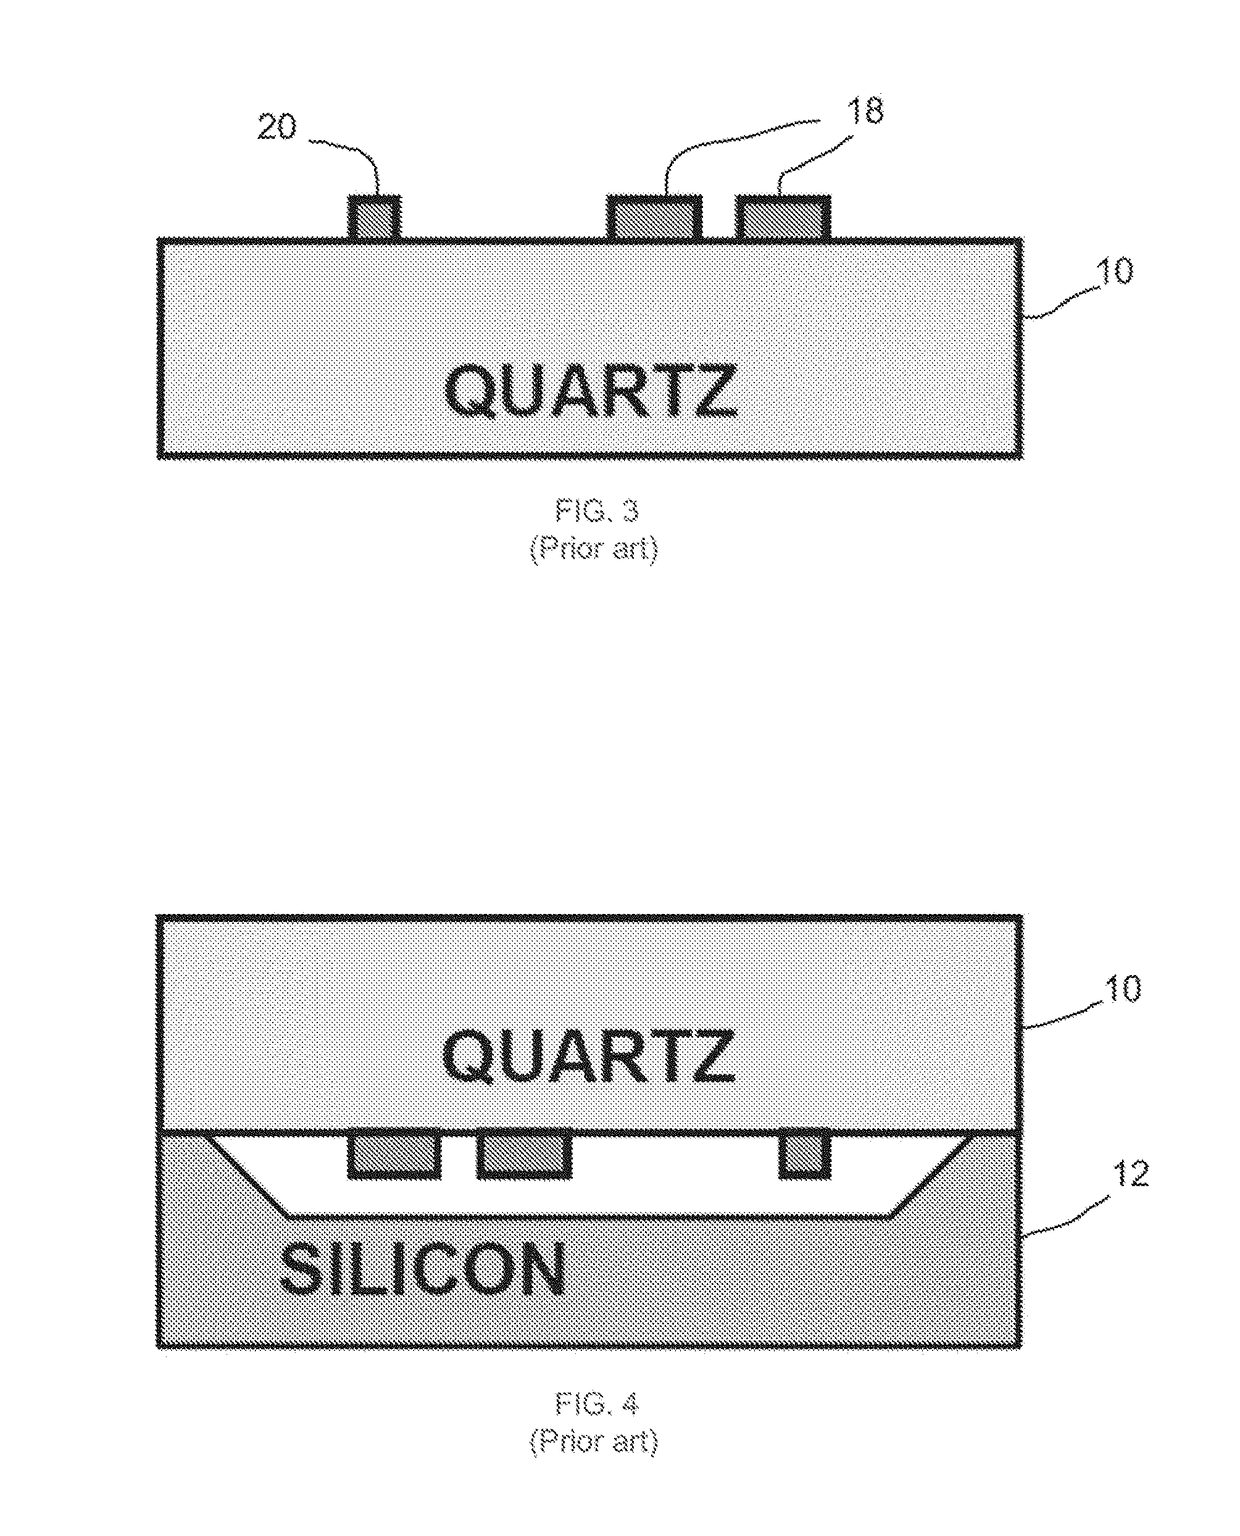 High Q quartz-based MEMS resonators and method of fabricating same